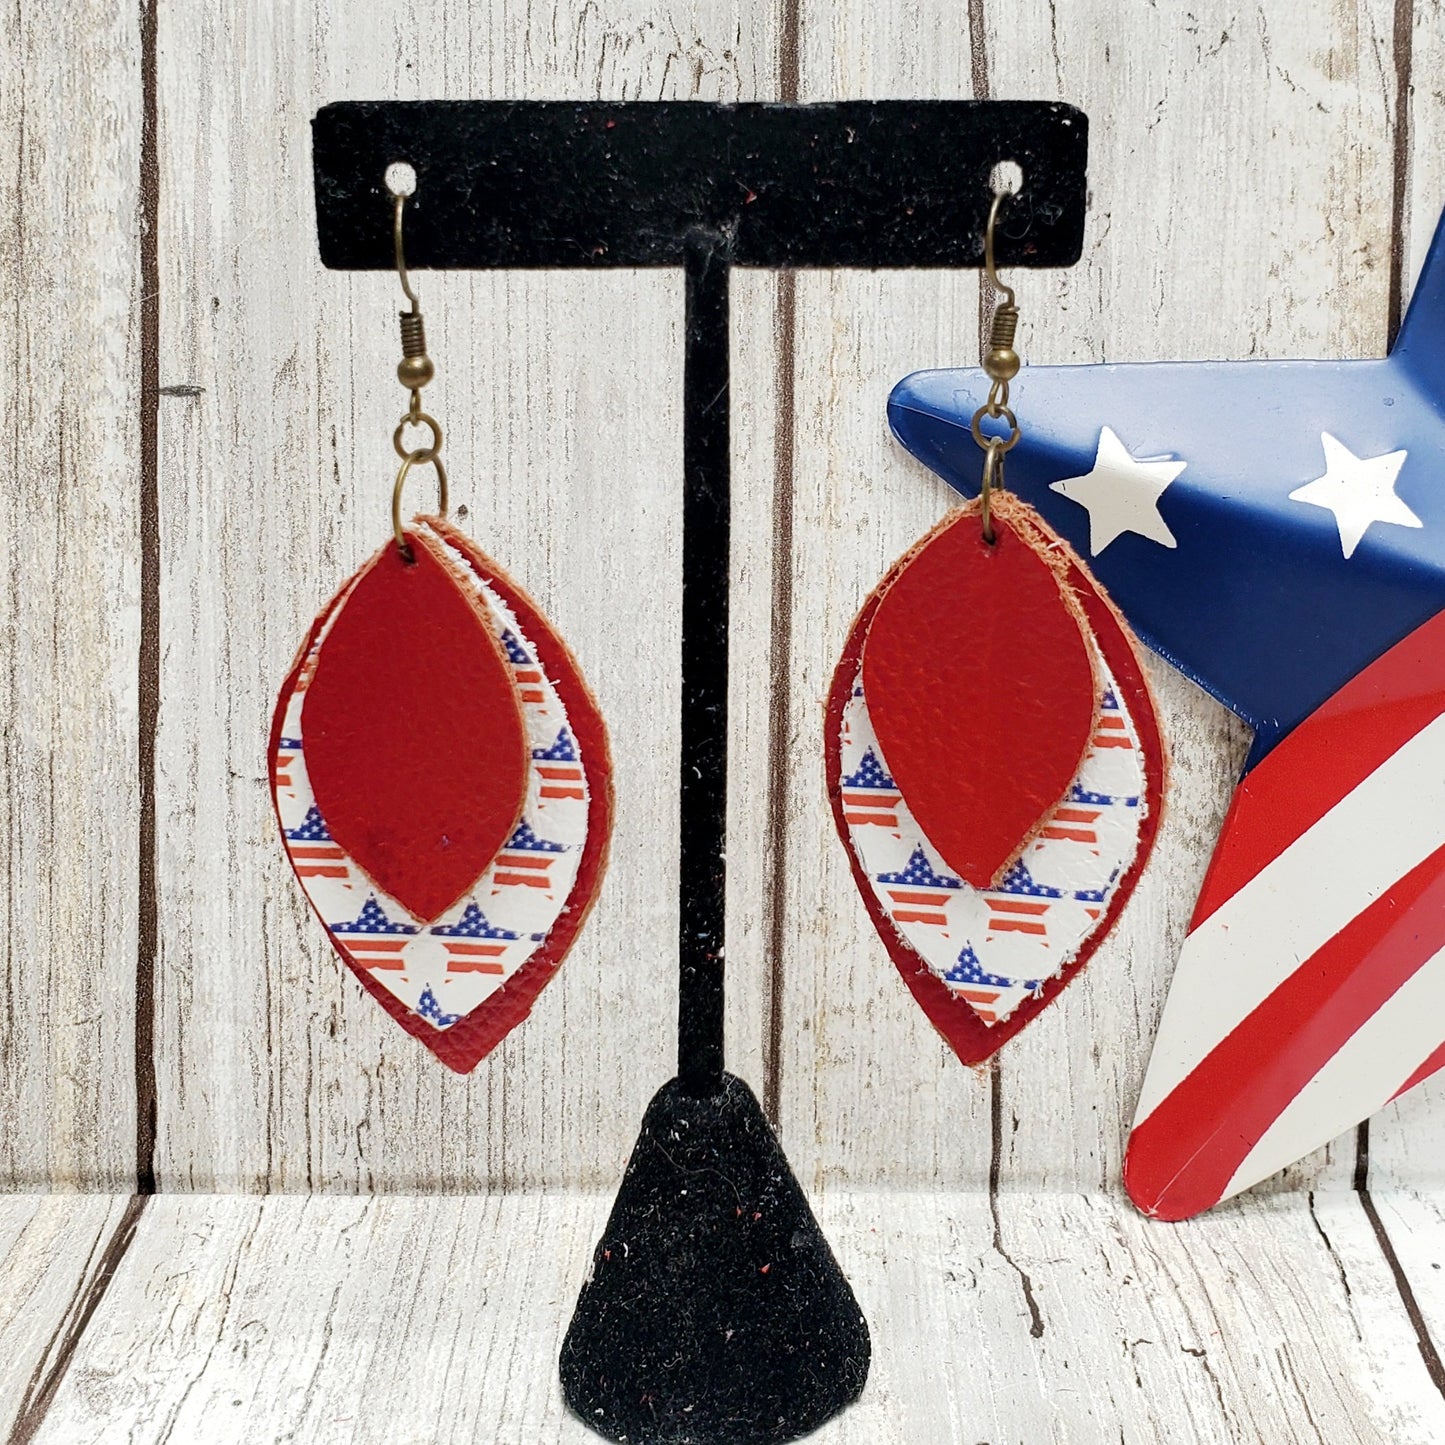 Betsy - layered leather earrings - patriotic earrings - americana earrings - 4th of July earrings - Memorial Day earrings - Veterans Day earrings